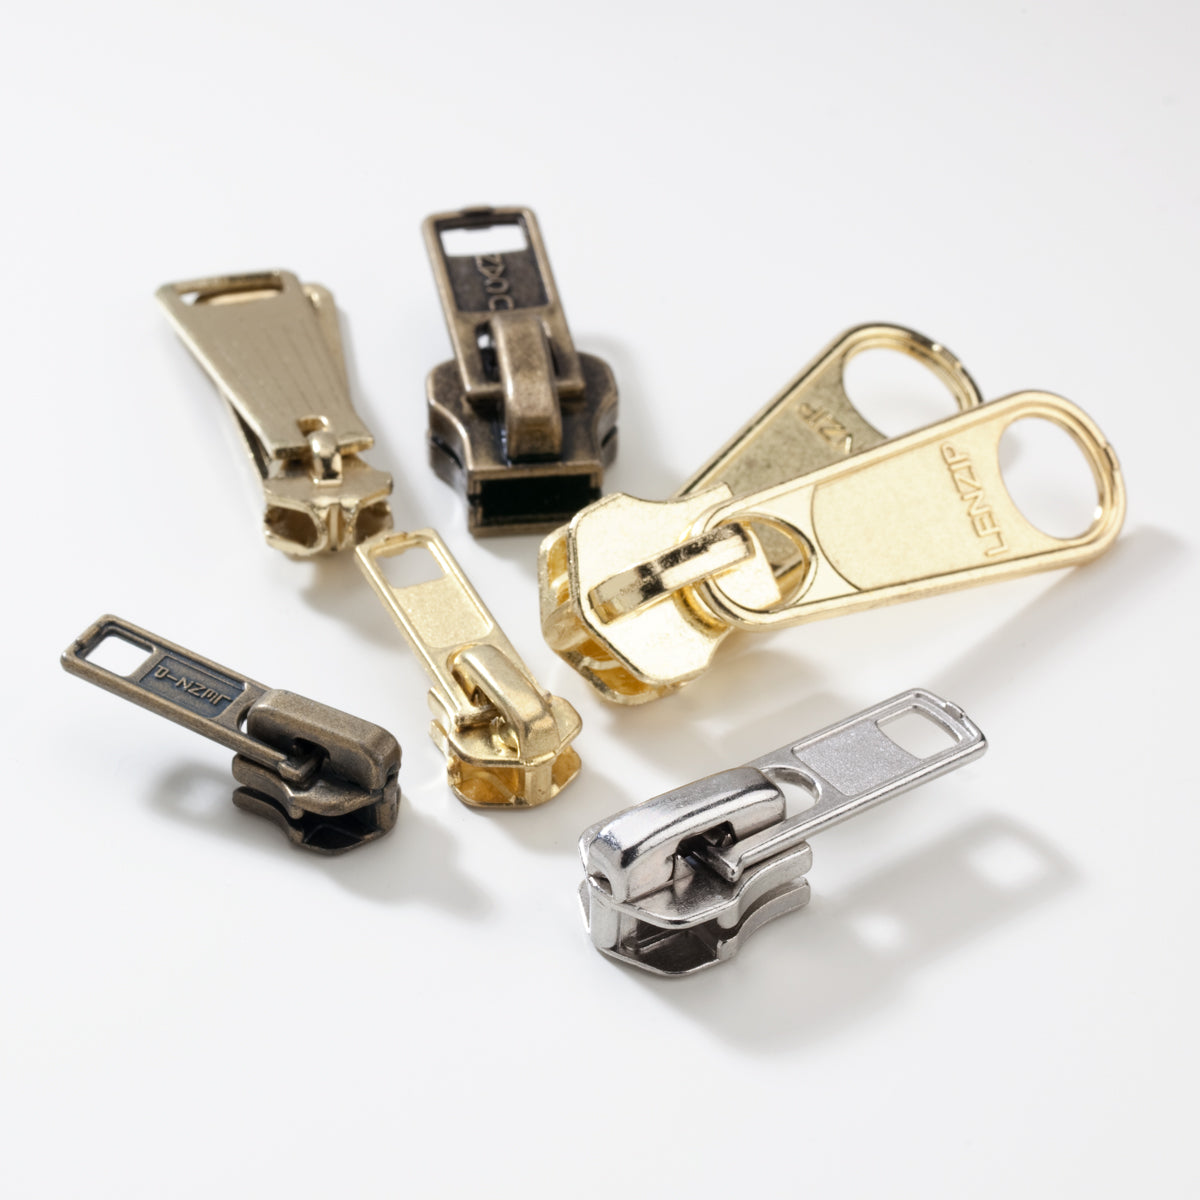 #10 Solid Brass Golden Zipper Top Stop and Bottom Stop,Zipper Repair Kit,Zipper Slider Retainer (#10)